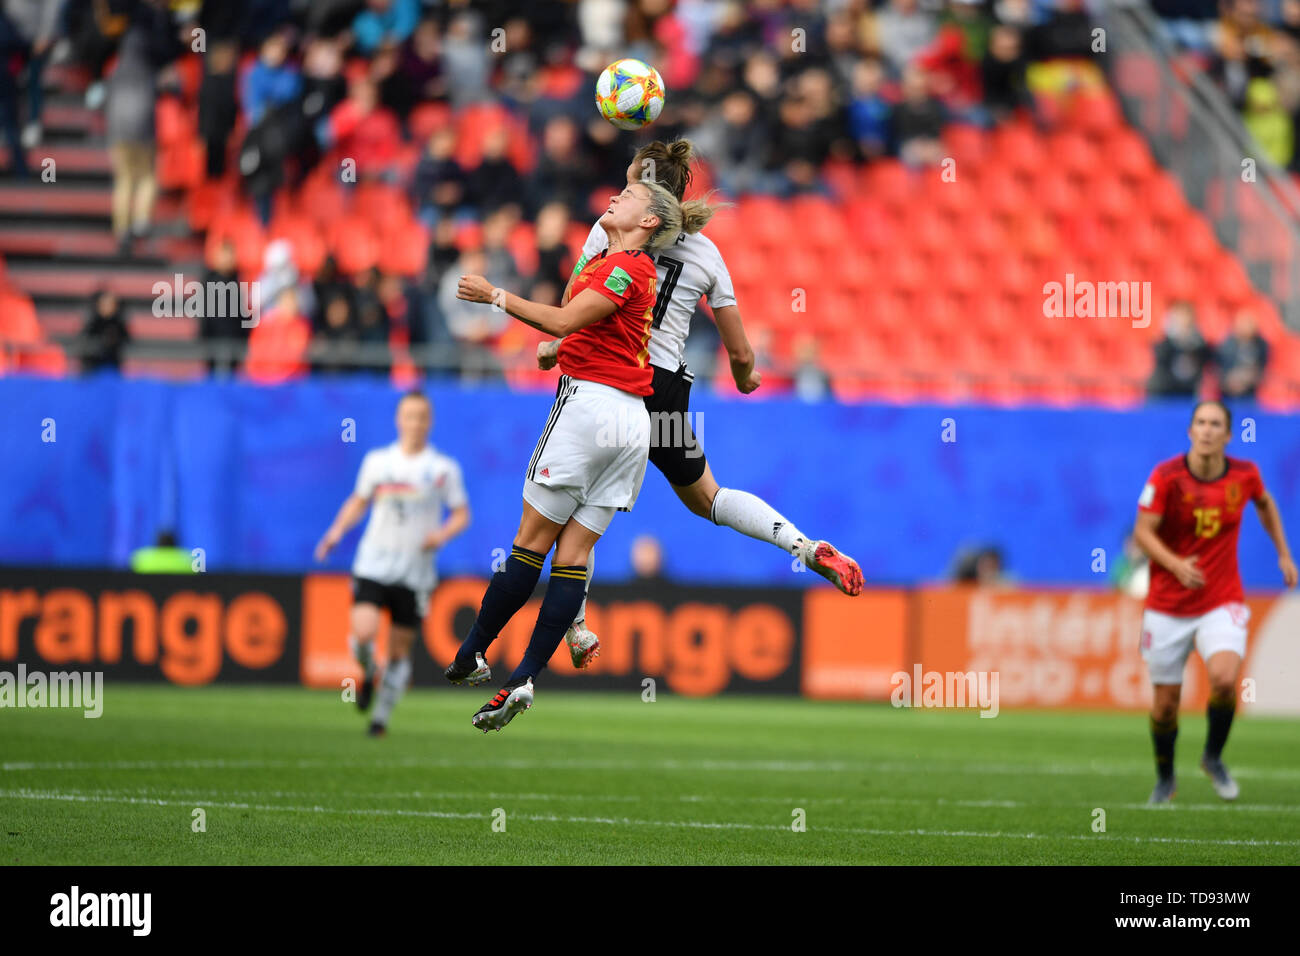 12 june 2019 Valenciennes, France Soccer FIFA Womens World Cup 2019 France: Germany v Spain   Alexandra Popp (DFB-Frauen) (11) wins a header against Virginia Torrecilla (Spanien) (14) Stock Photo